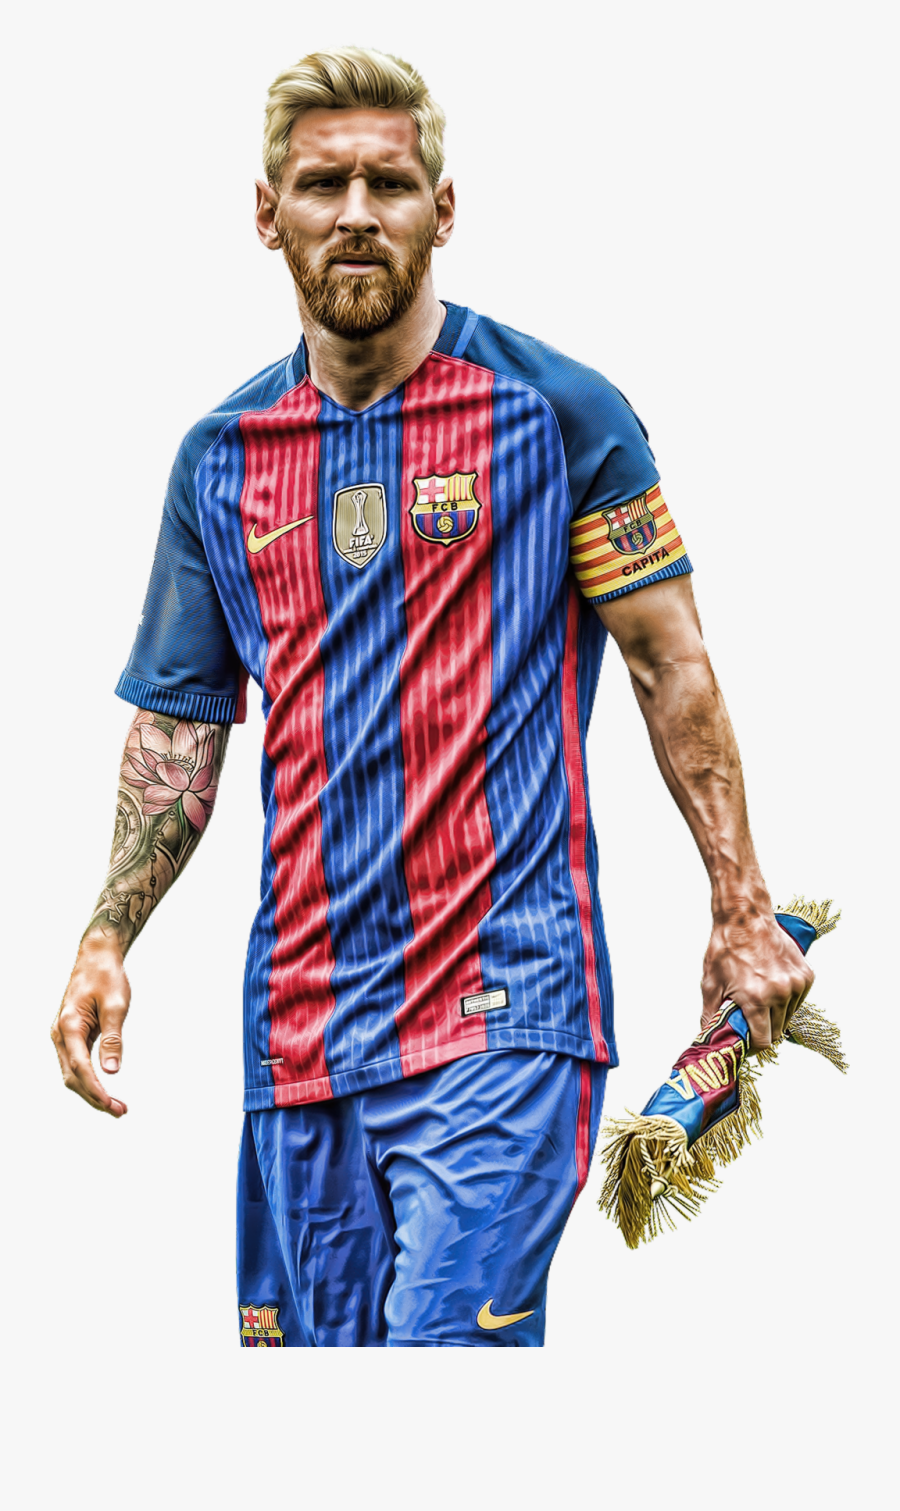 Lionel Messi Png Barca 2017 - Lionel Messi Png 2017, Transparent Clipart